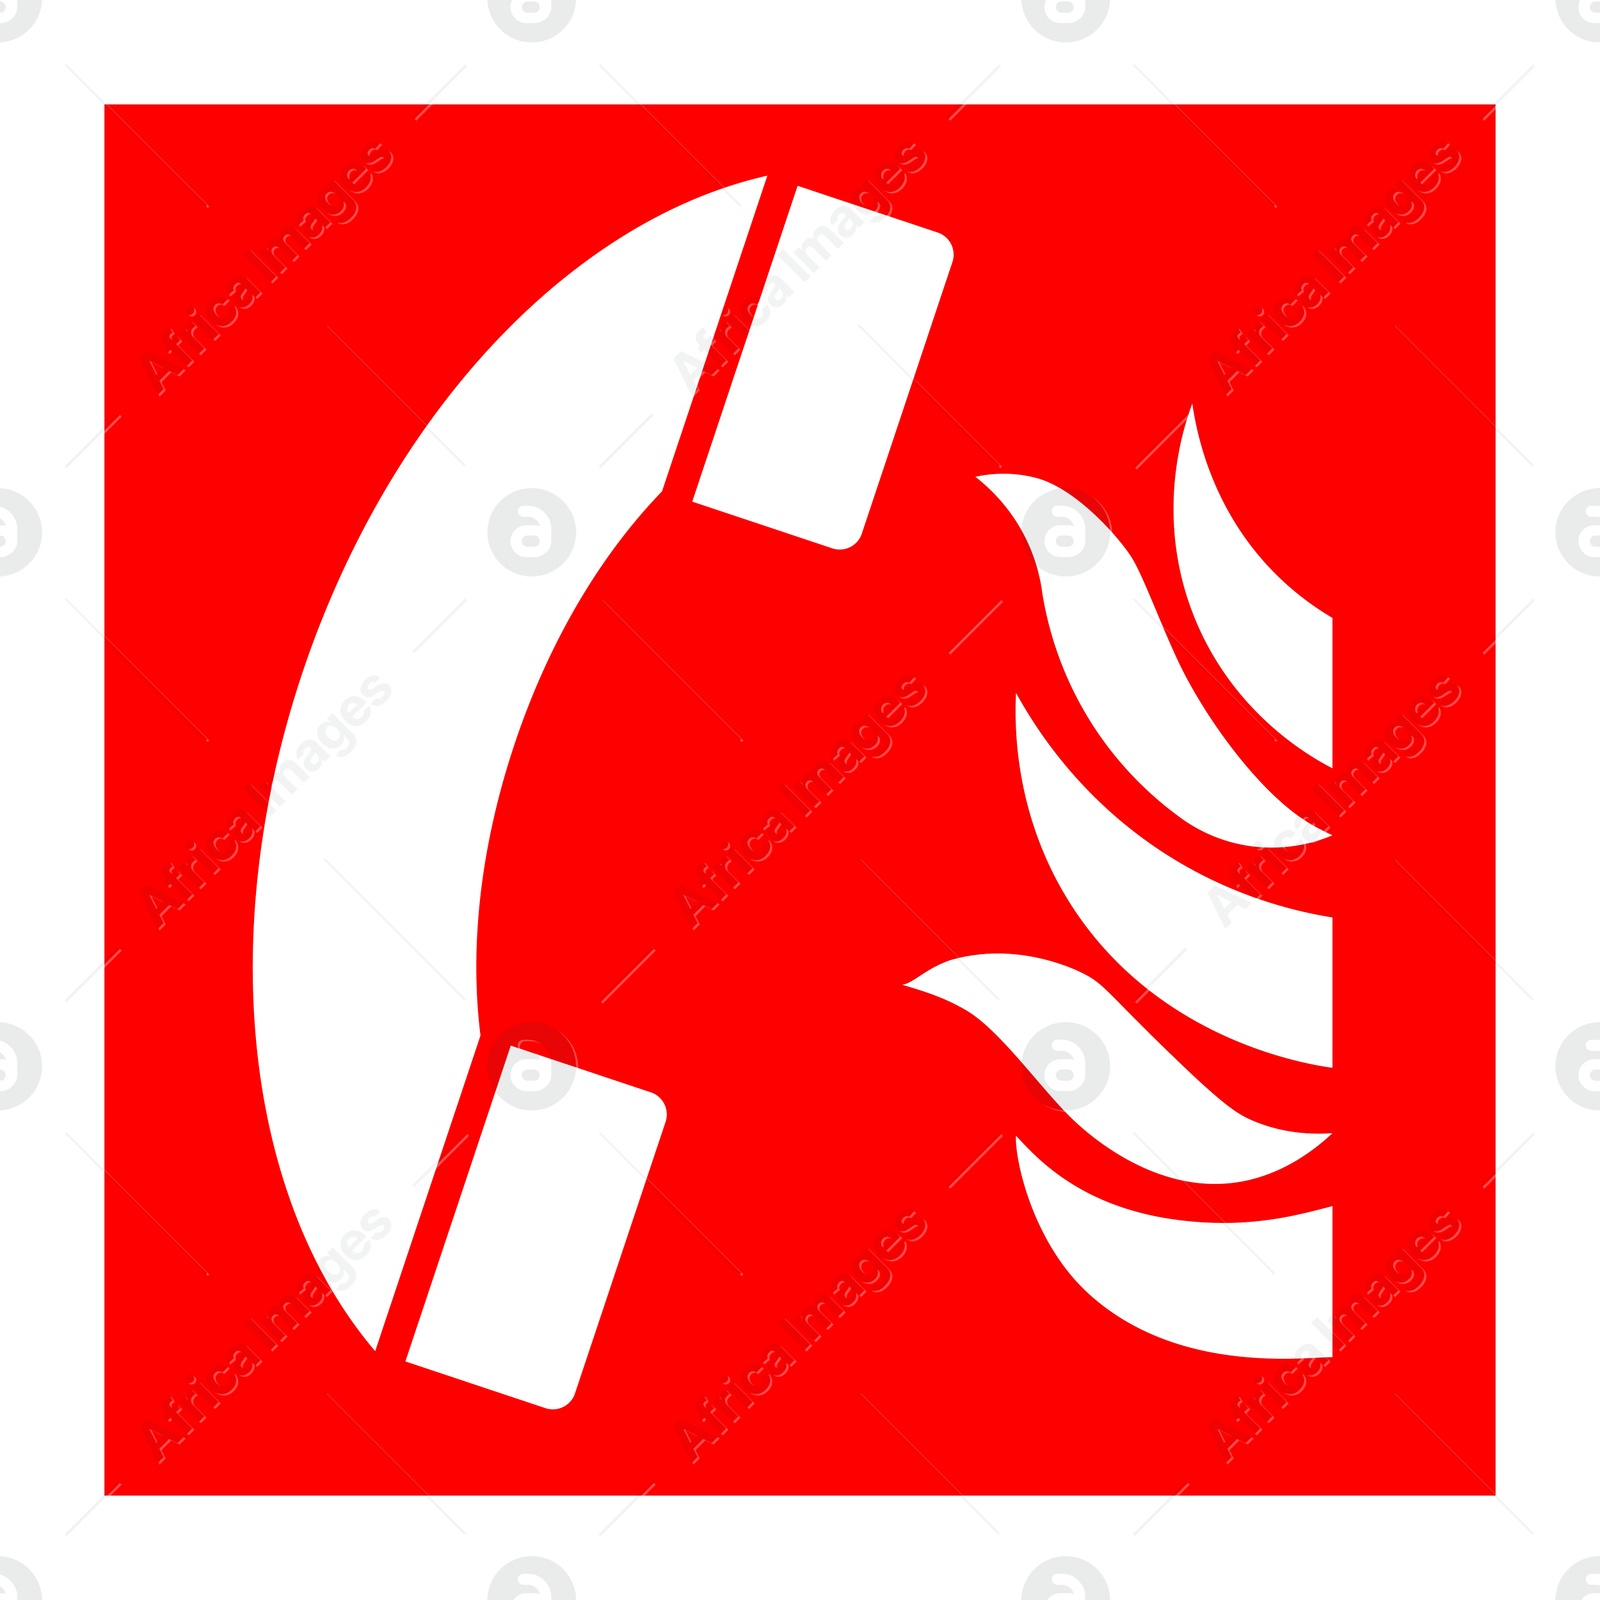 Image of International Maritime Organization (IMO) sign, illustration. Fire telephone